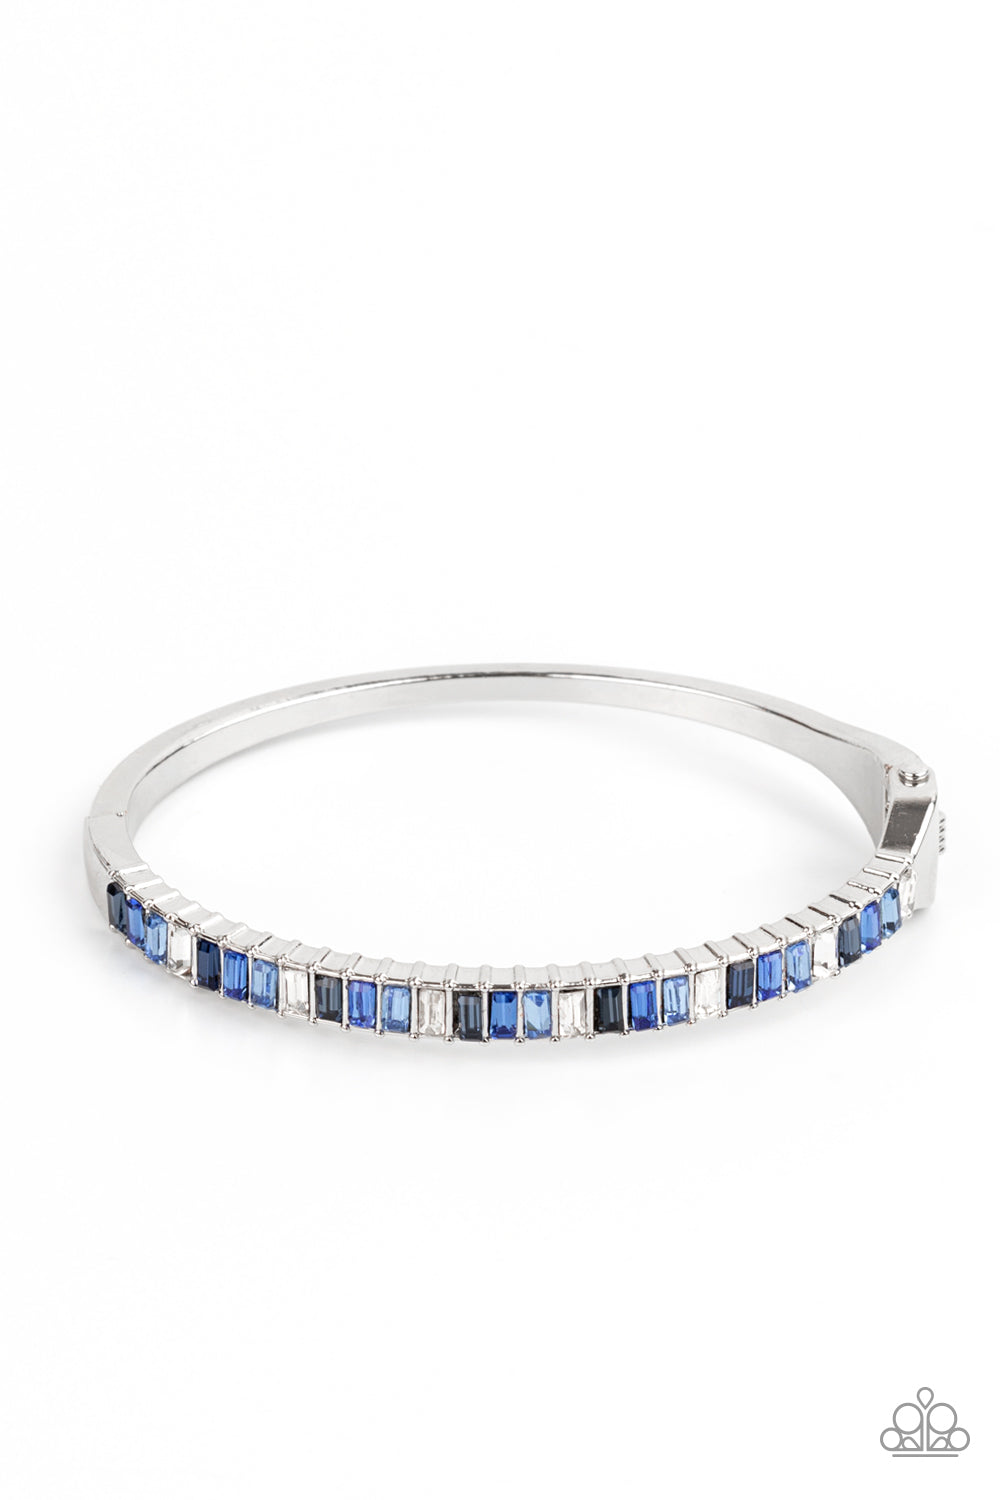 Paparazzi Toast to Twinkle - Blue Bracelet - A Finishing Touch Jewelry